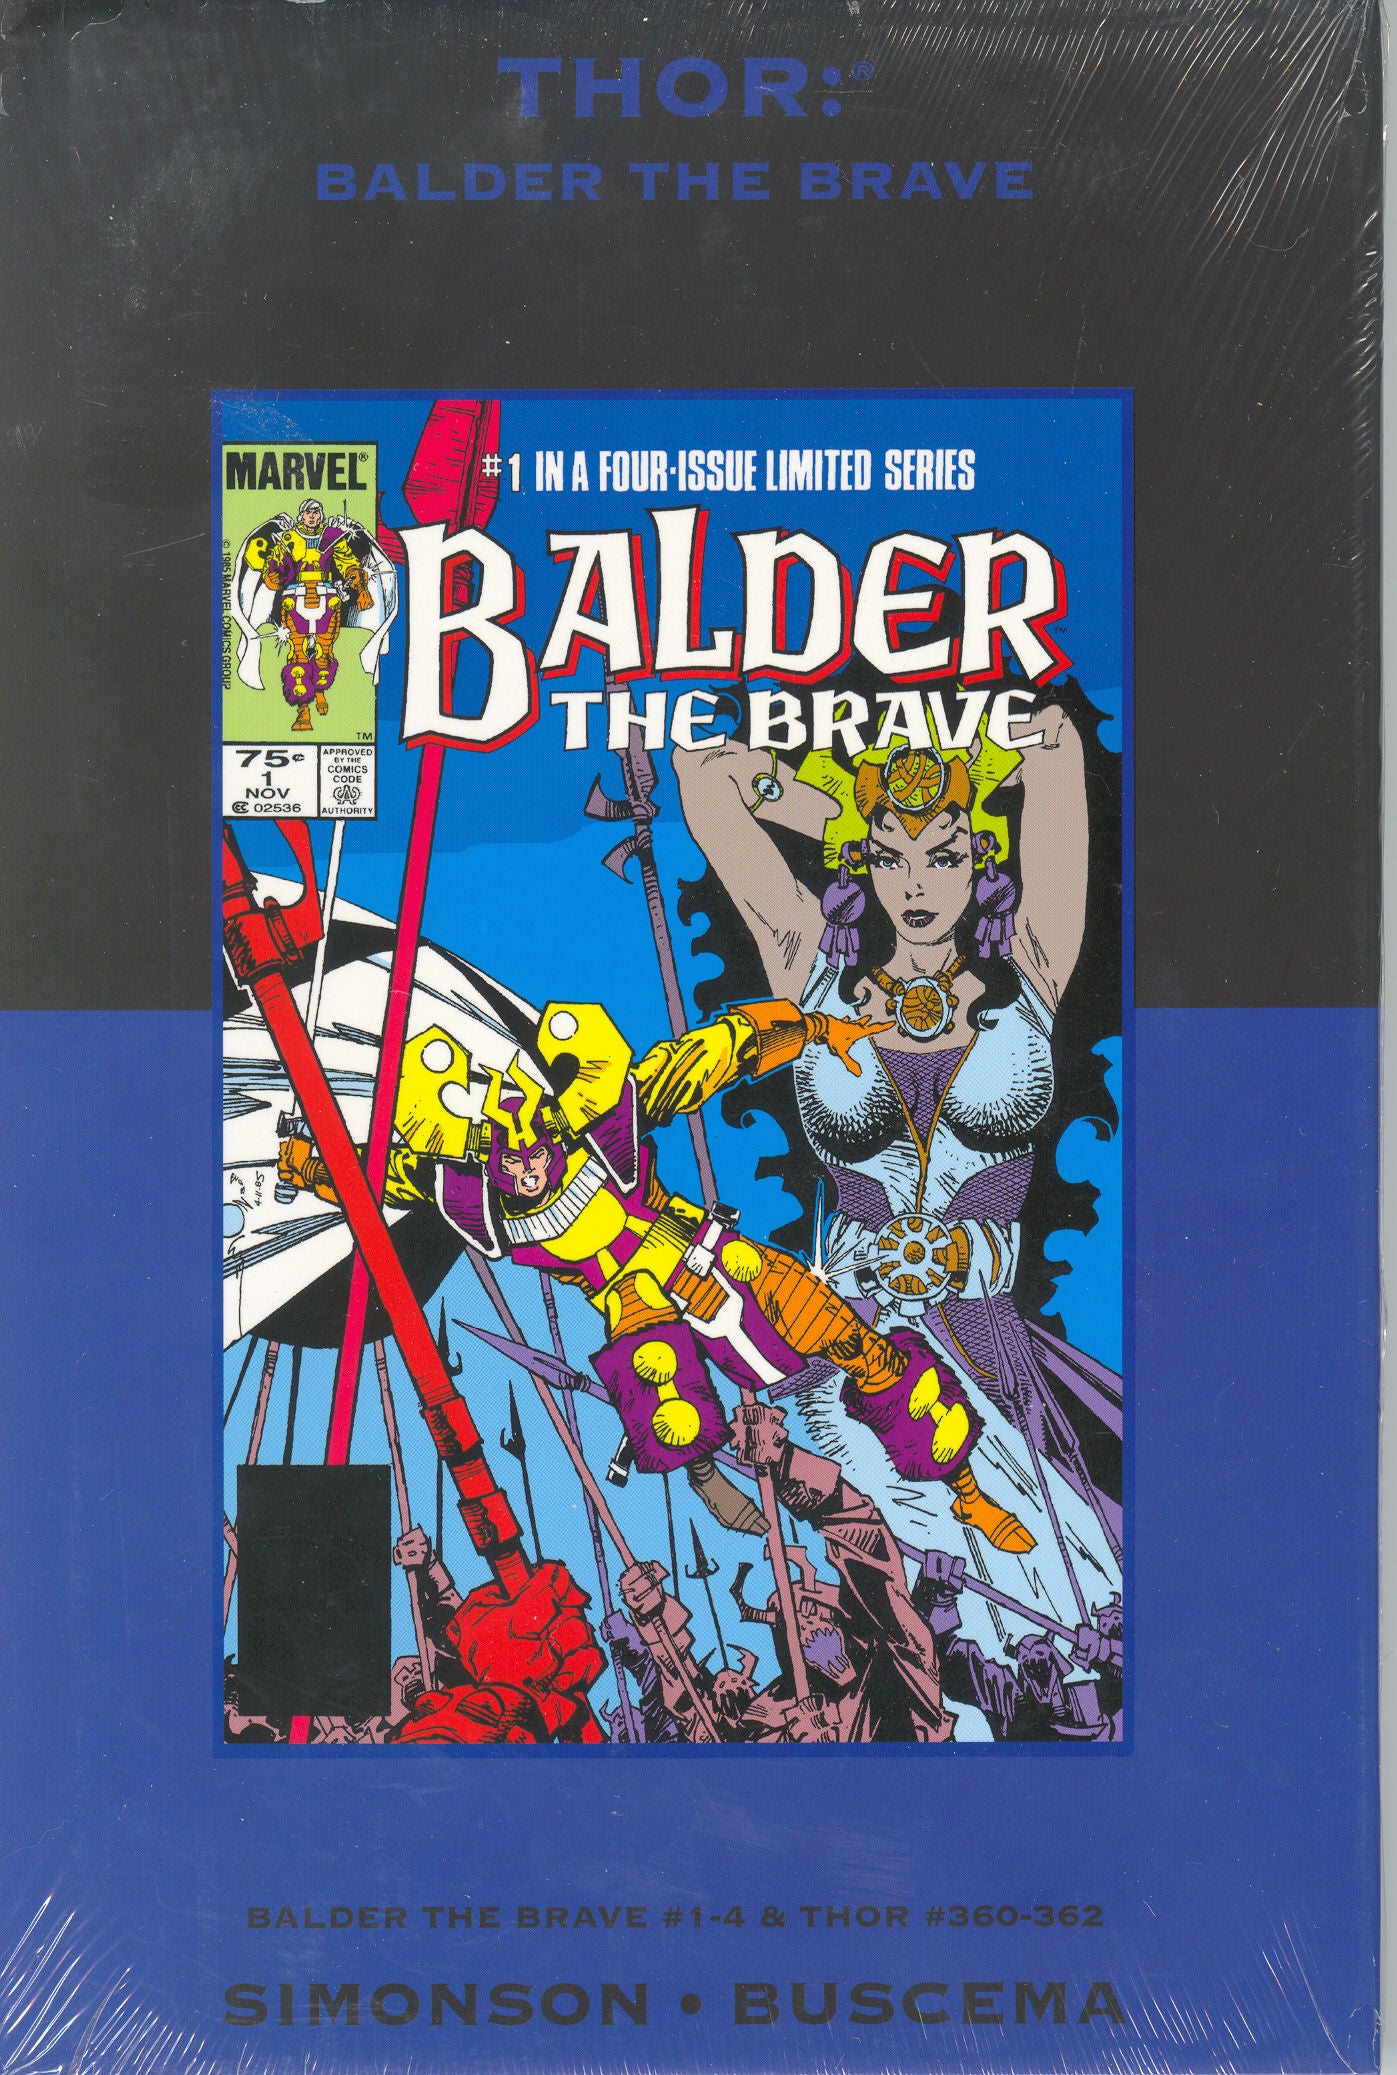 Marvel Premiere Classic Vol 29 - Thor: Balder the Brave